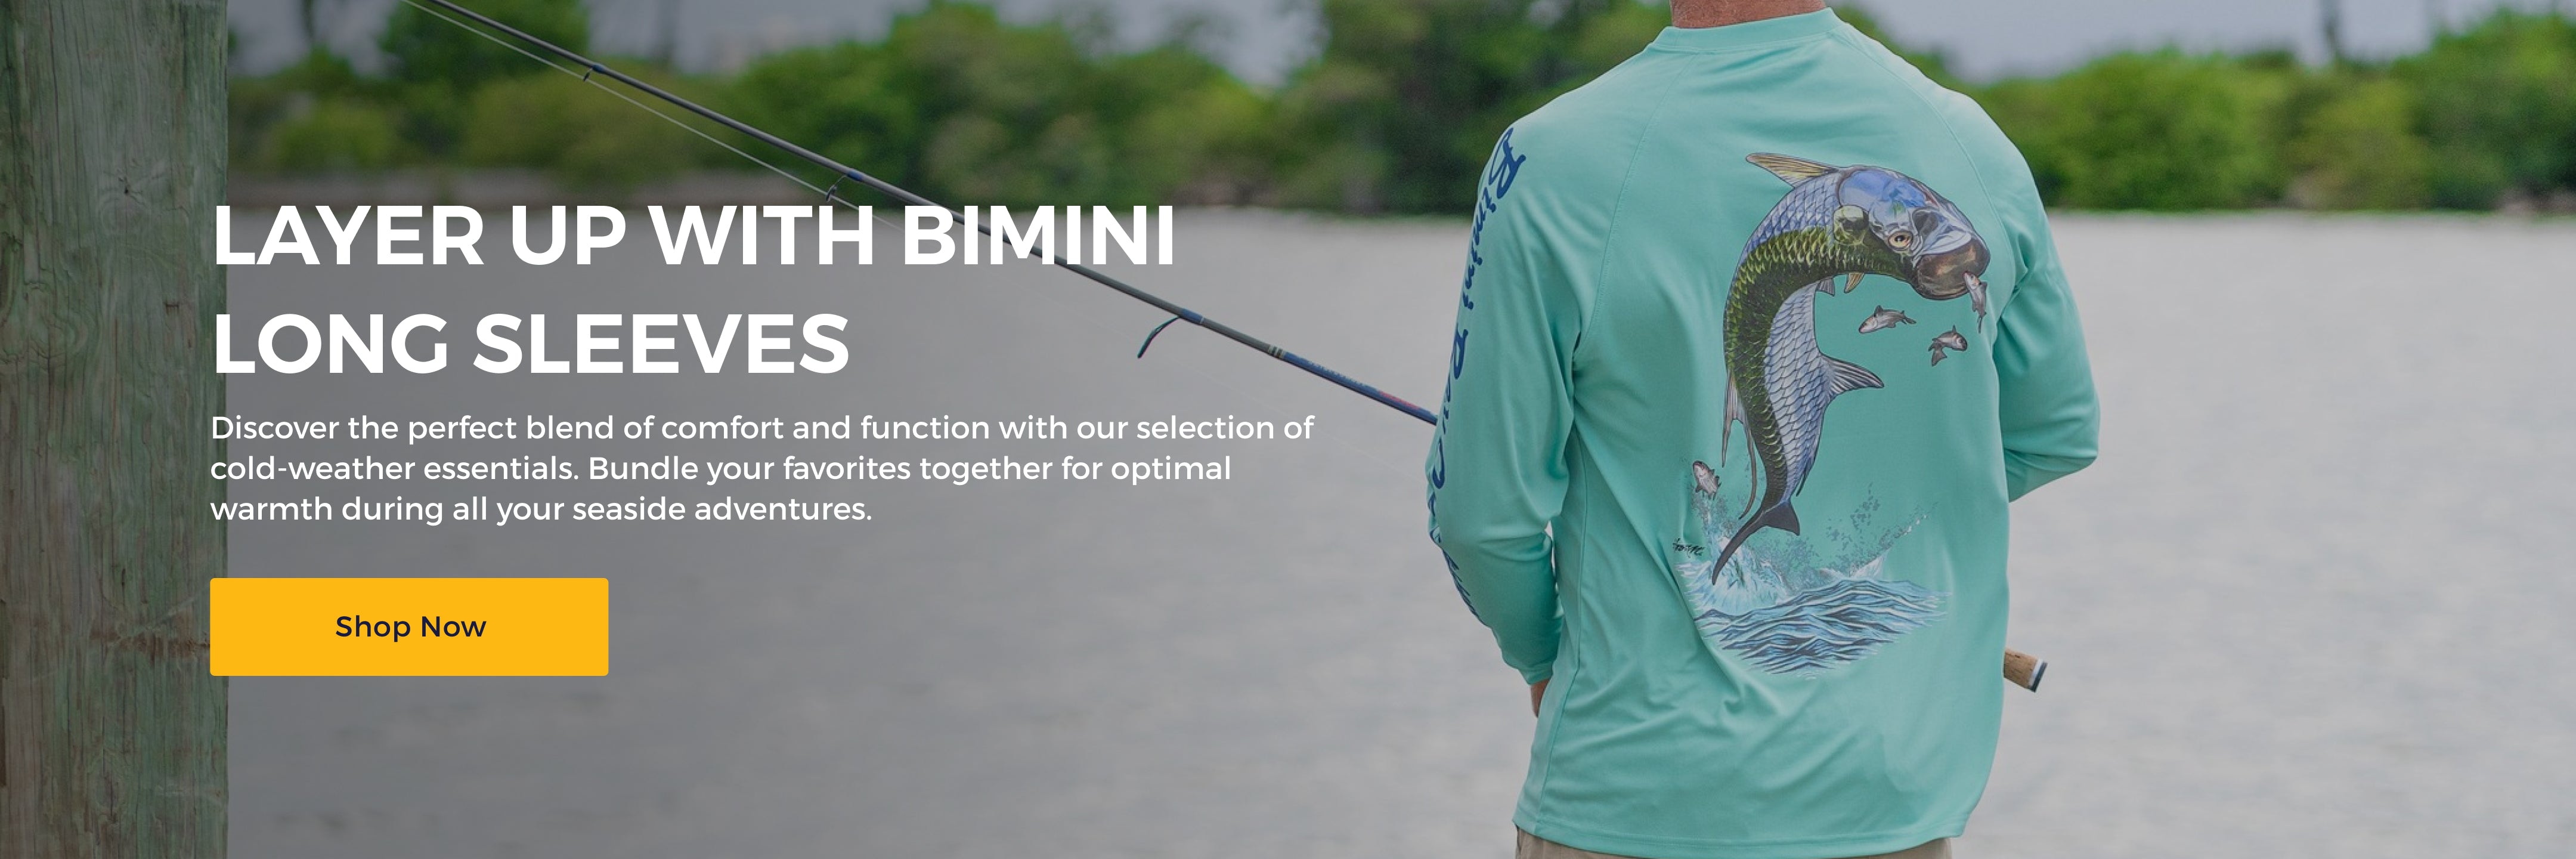 Bimini Bay Outfitters Women's Size 4 Capri Pants Nylon Lightweight Fishing